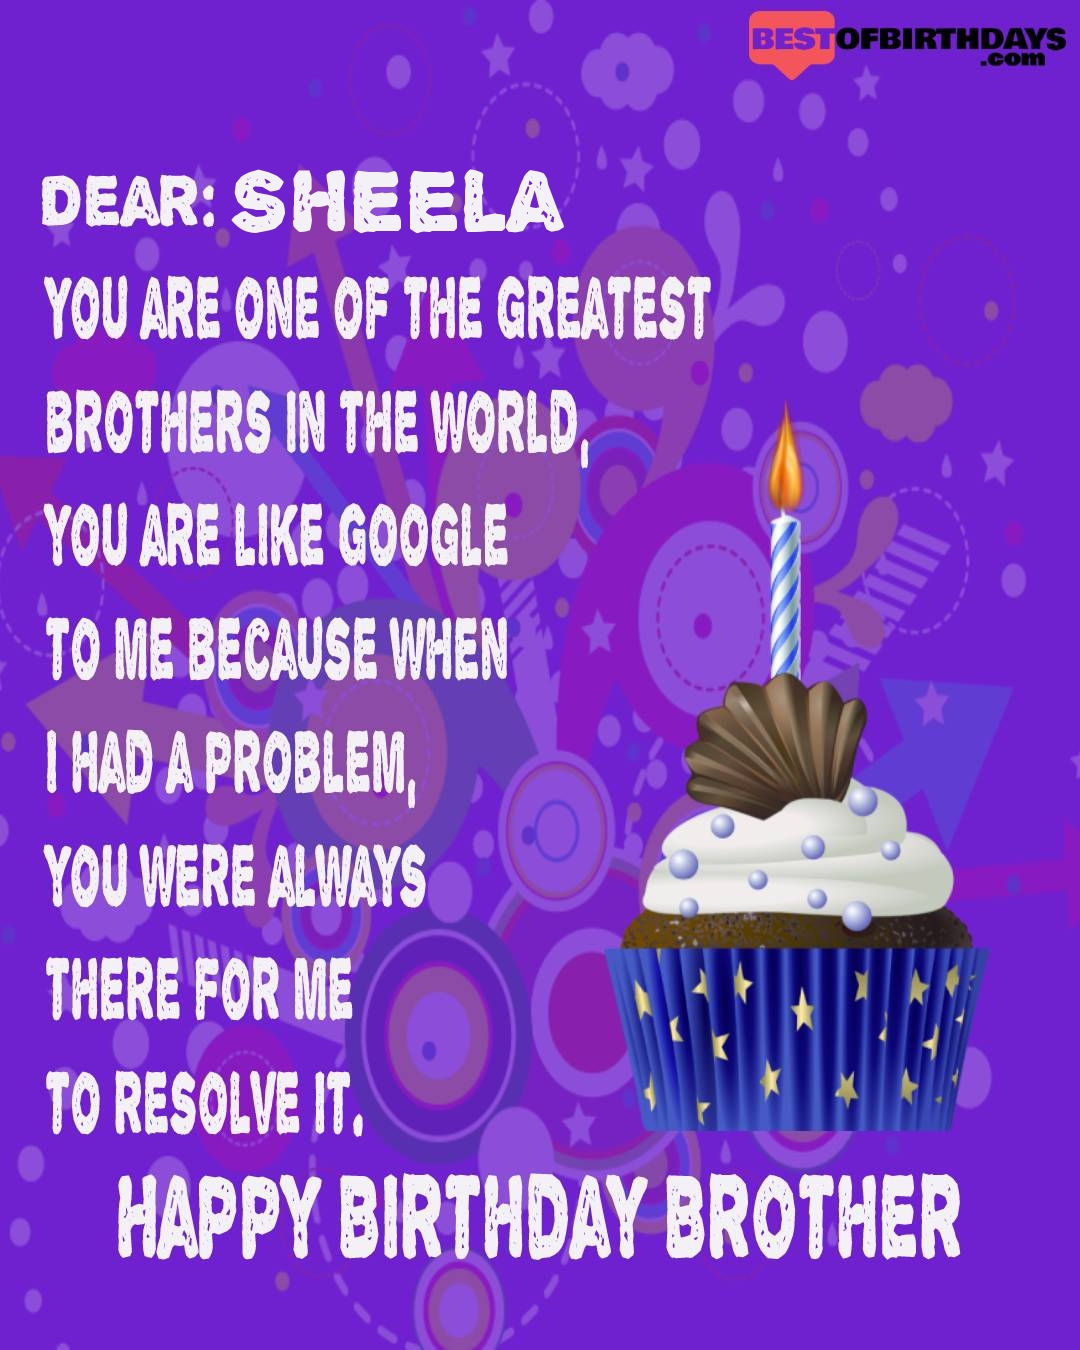 Happy birthday sheela bhai brother bro